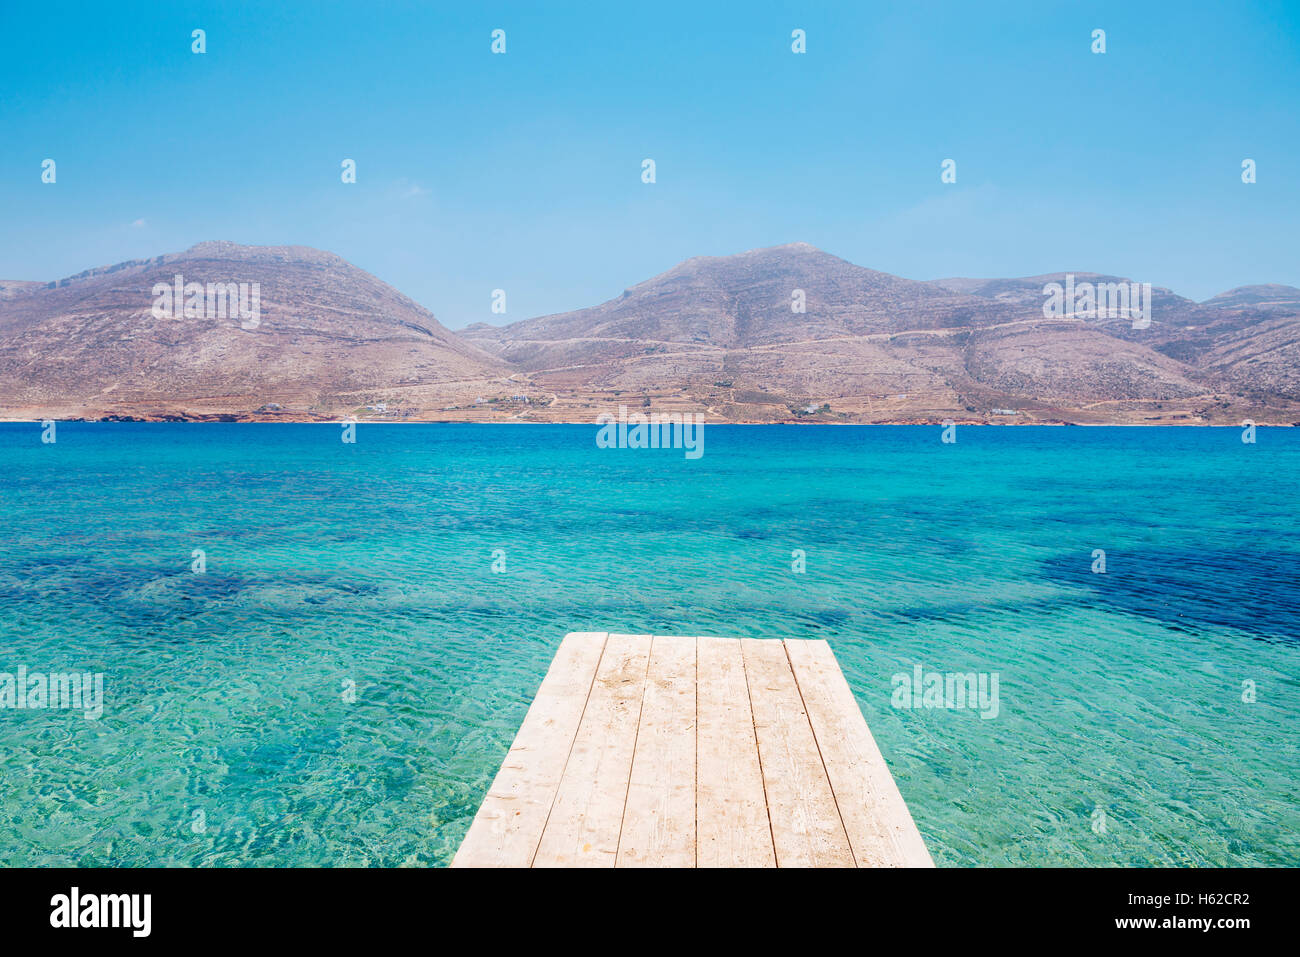 Greece, Cyclades, Amorgos, Nikouria island, wooden jetty and Aegean Sea Stock Photo